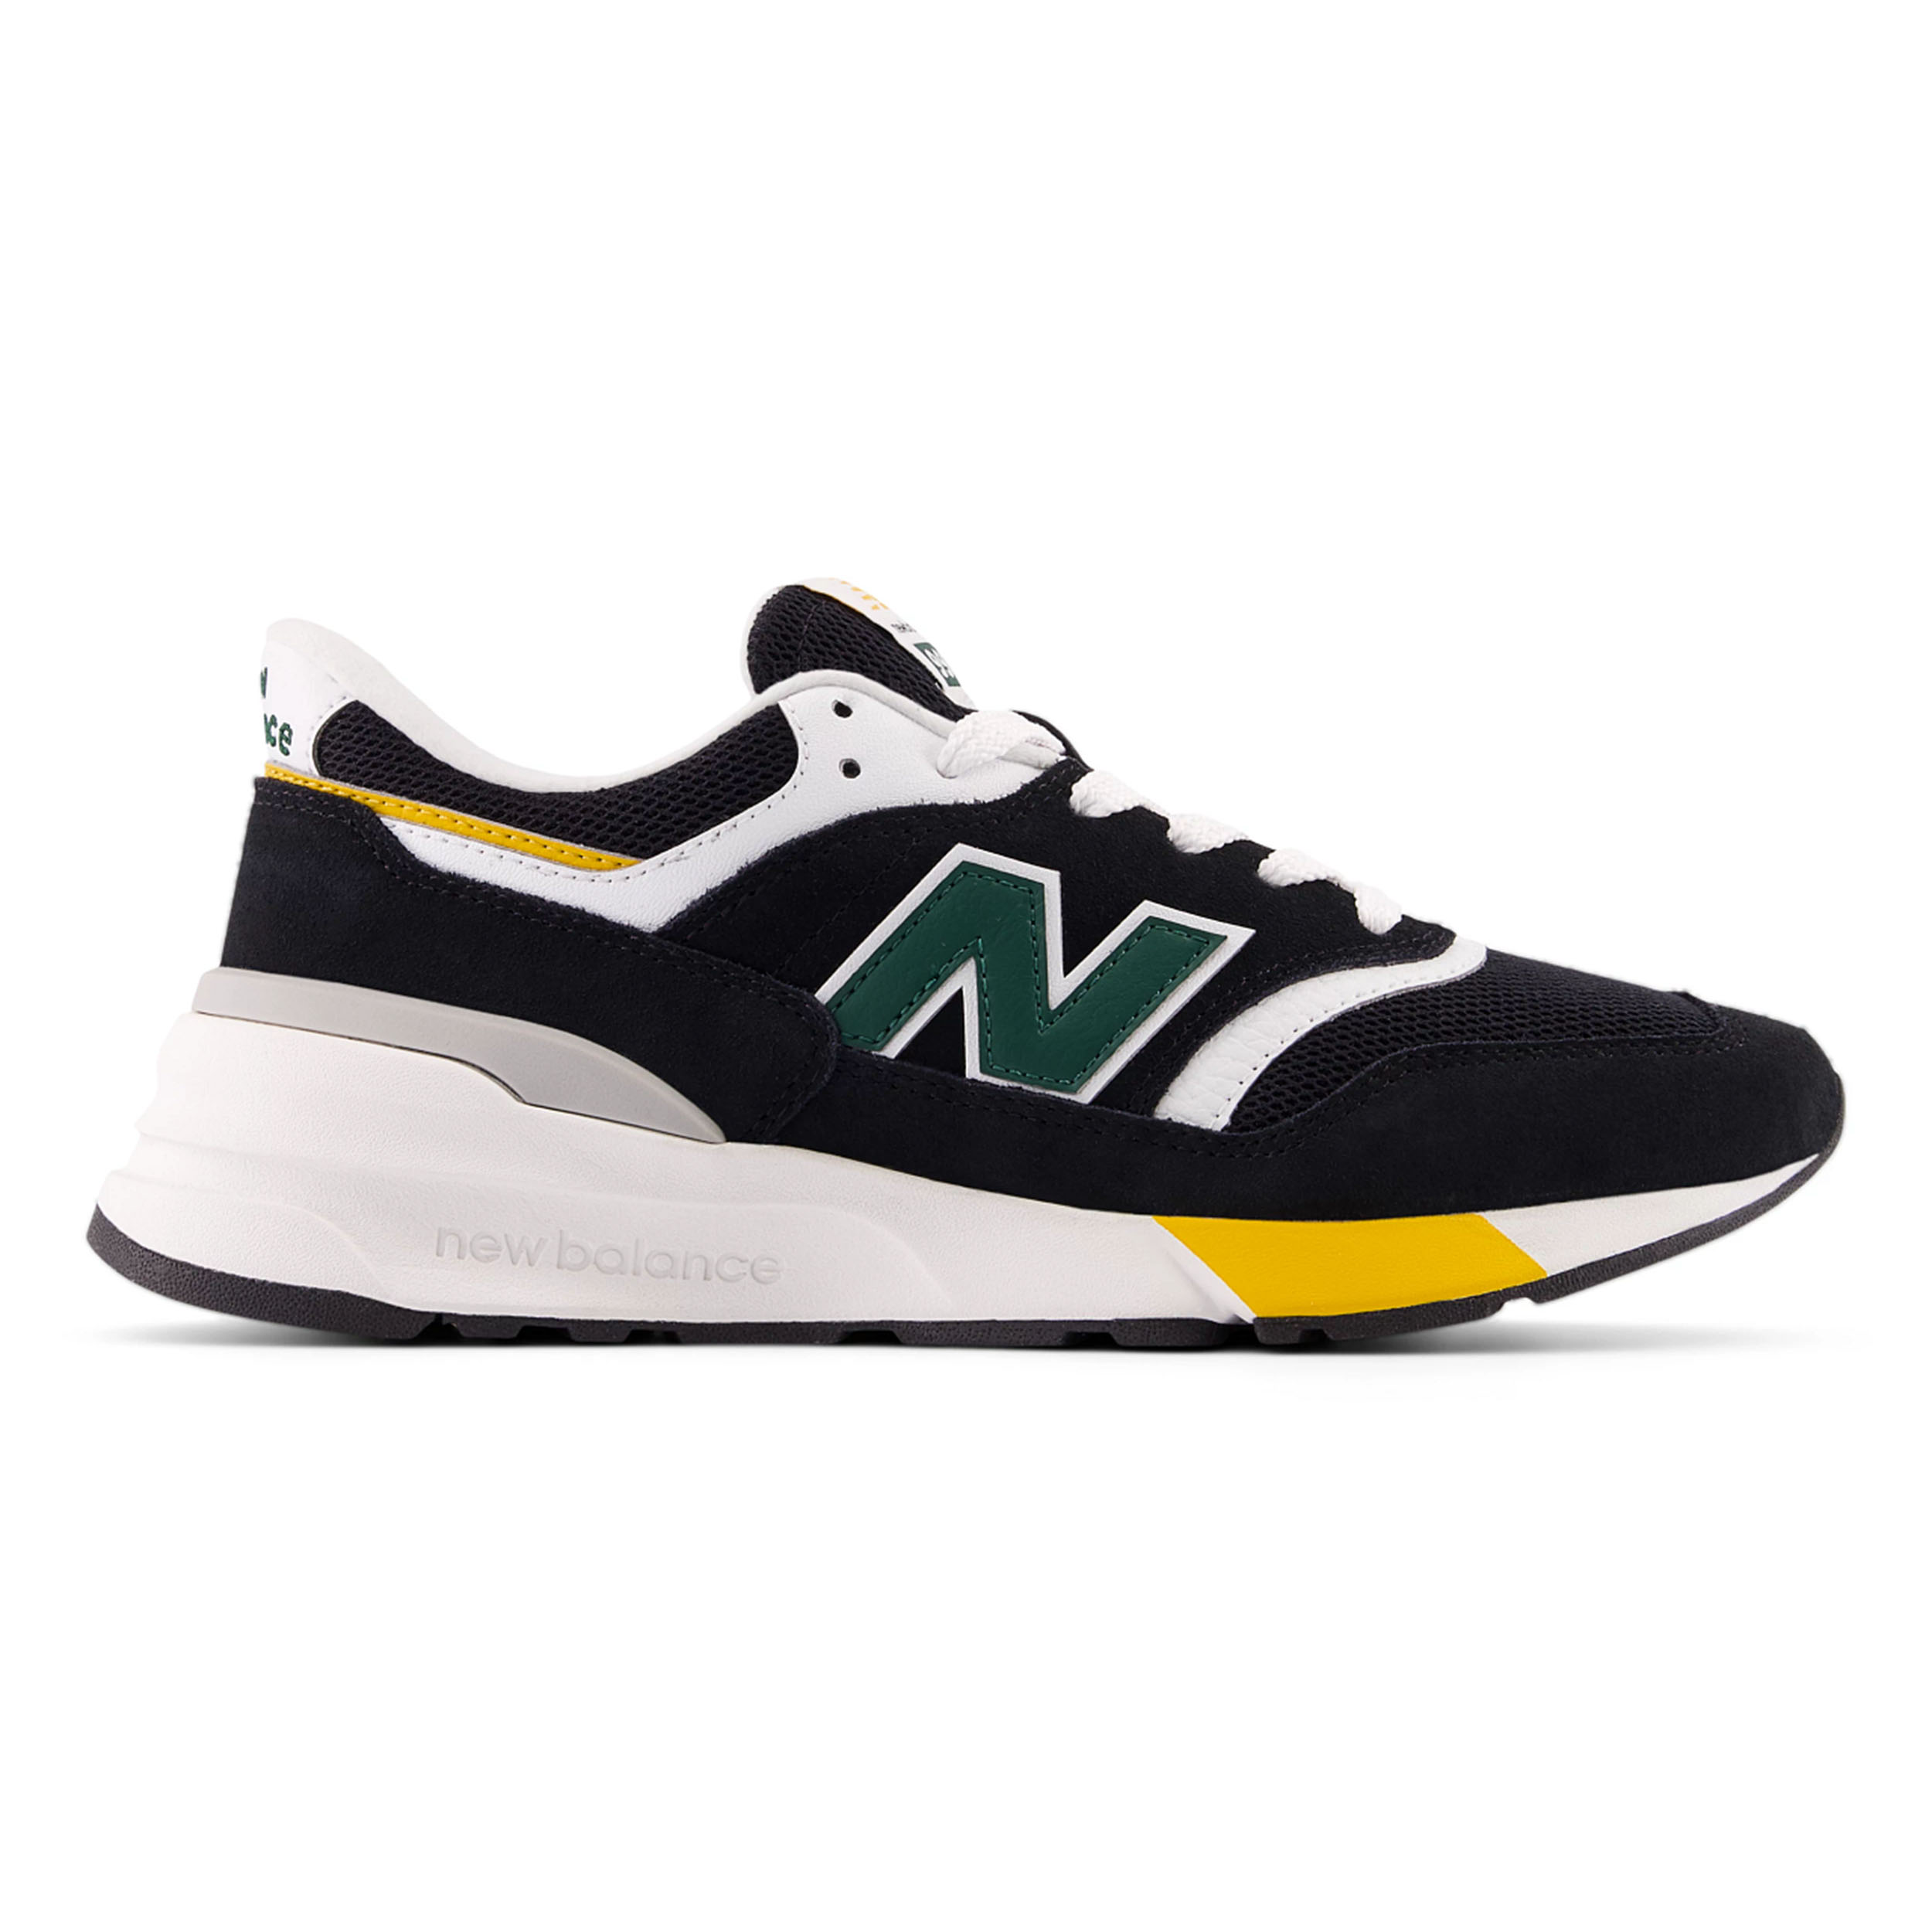 New Balance 997 Sneaker Black/Nightwatch Green